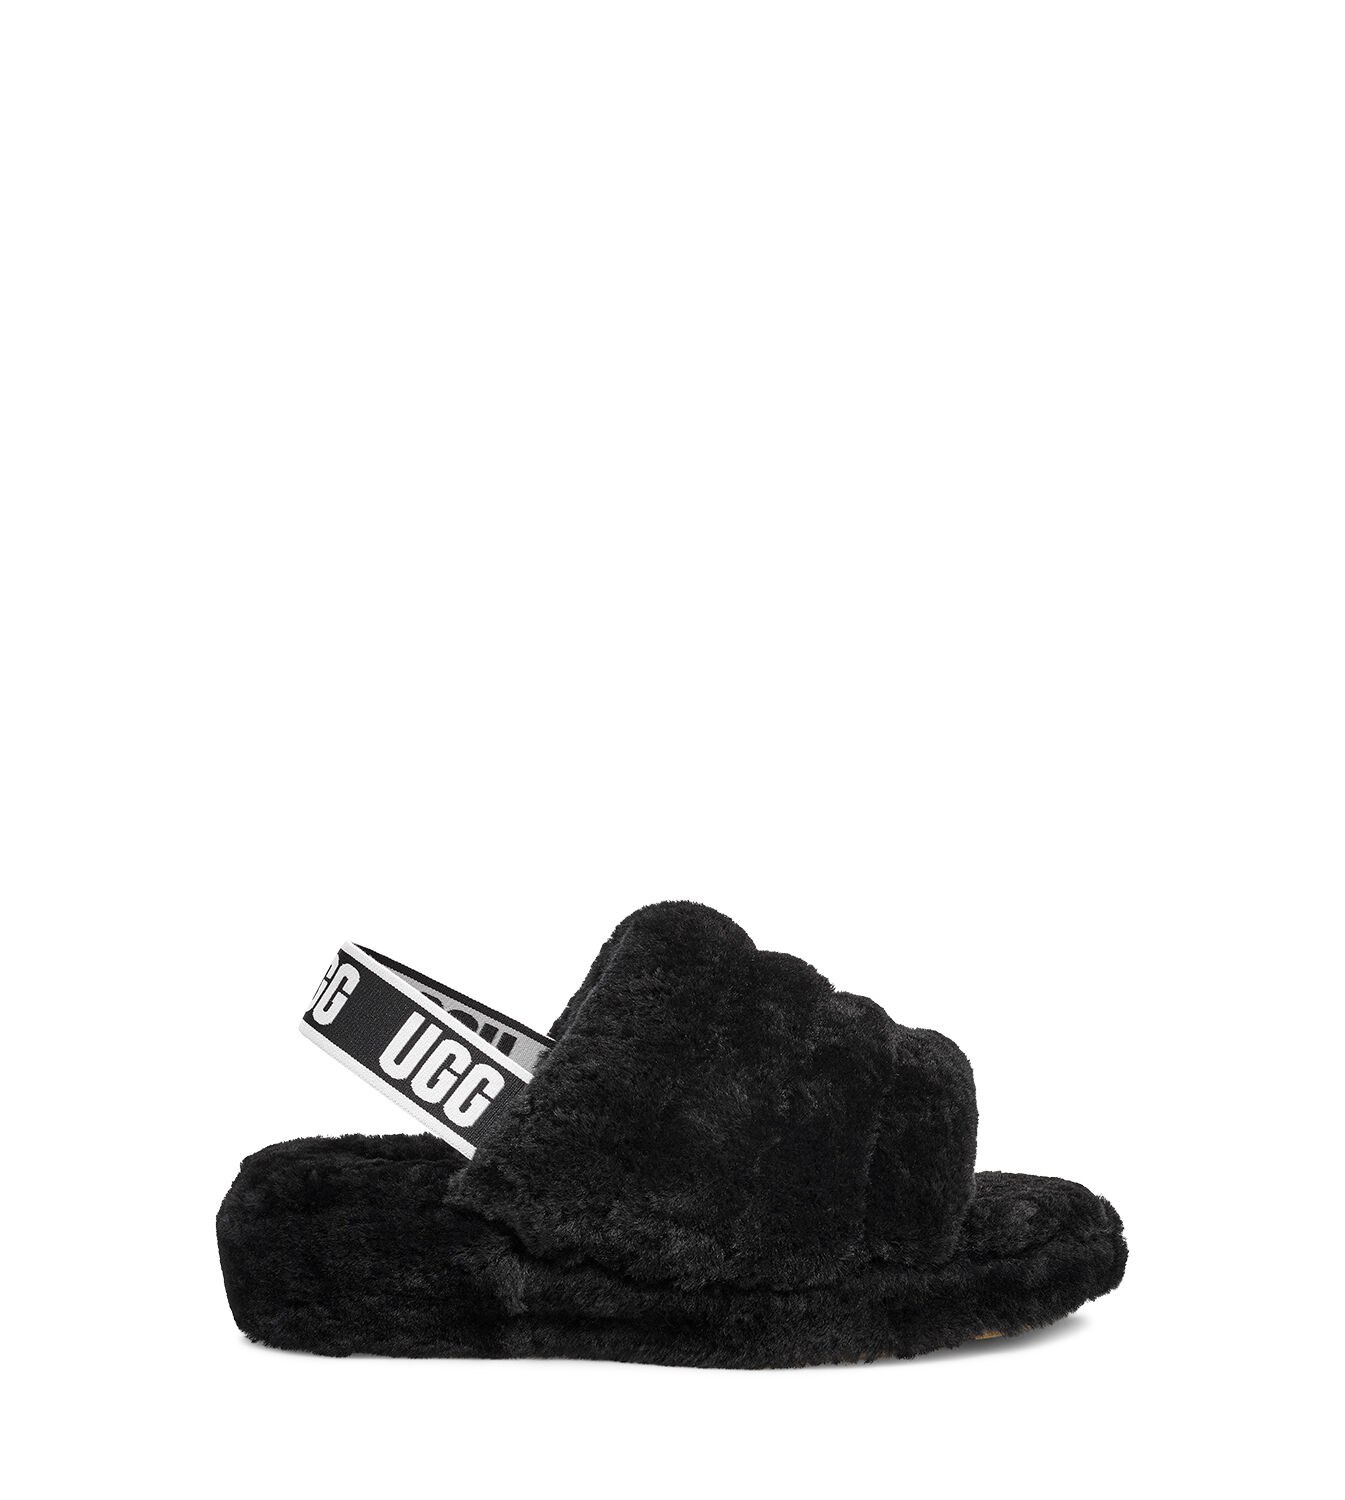 slippers like uggs but cheaper